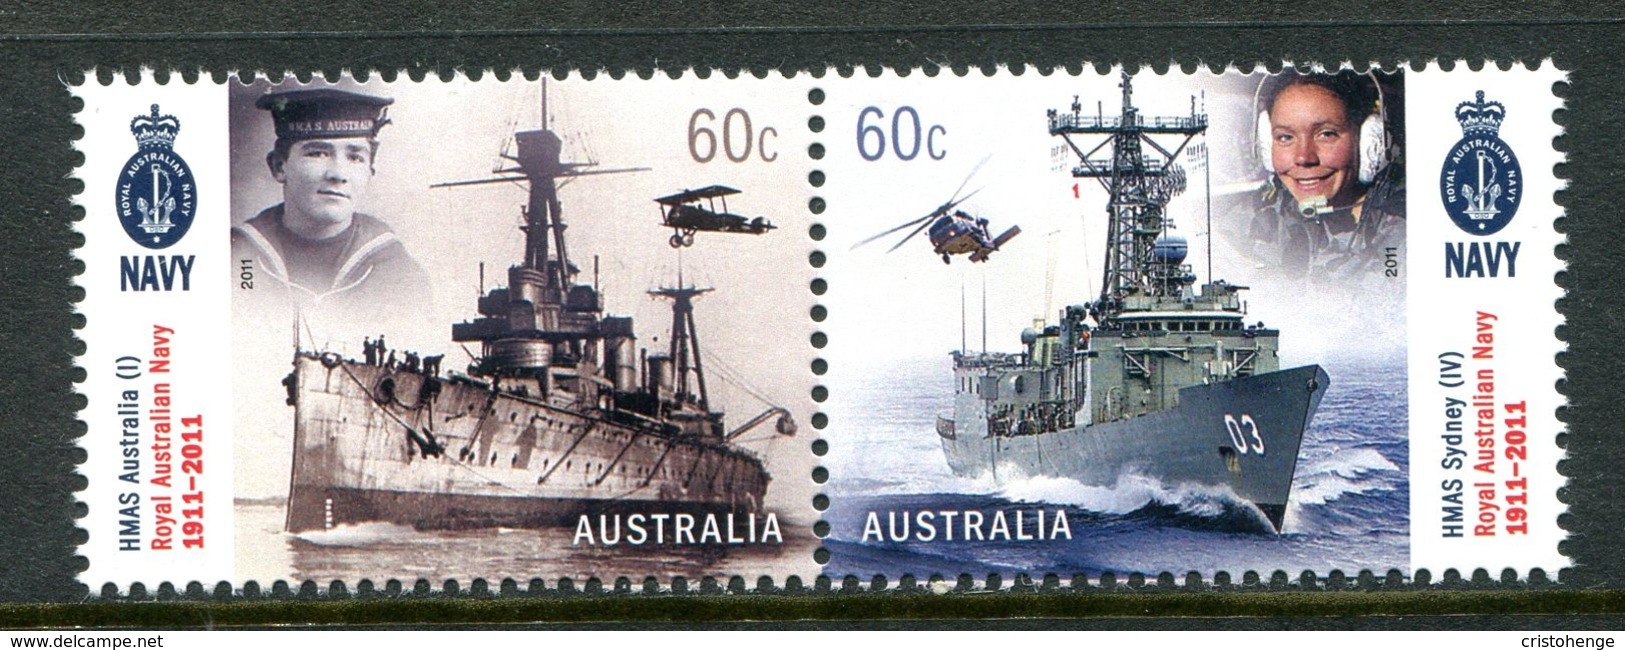 Australia 2011 Centenary Of Royal Australian Navy Set MNH (SG 3604-3605) - Mint Stamps